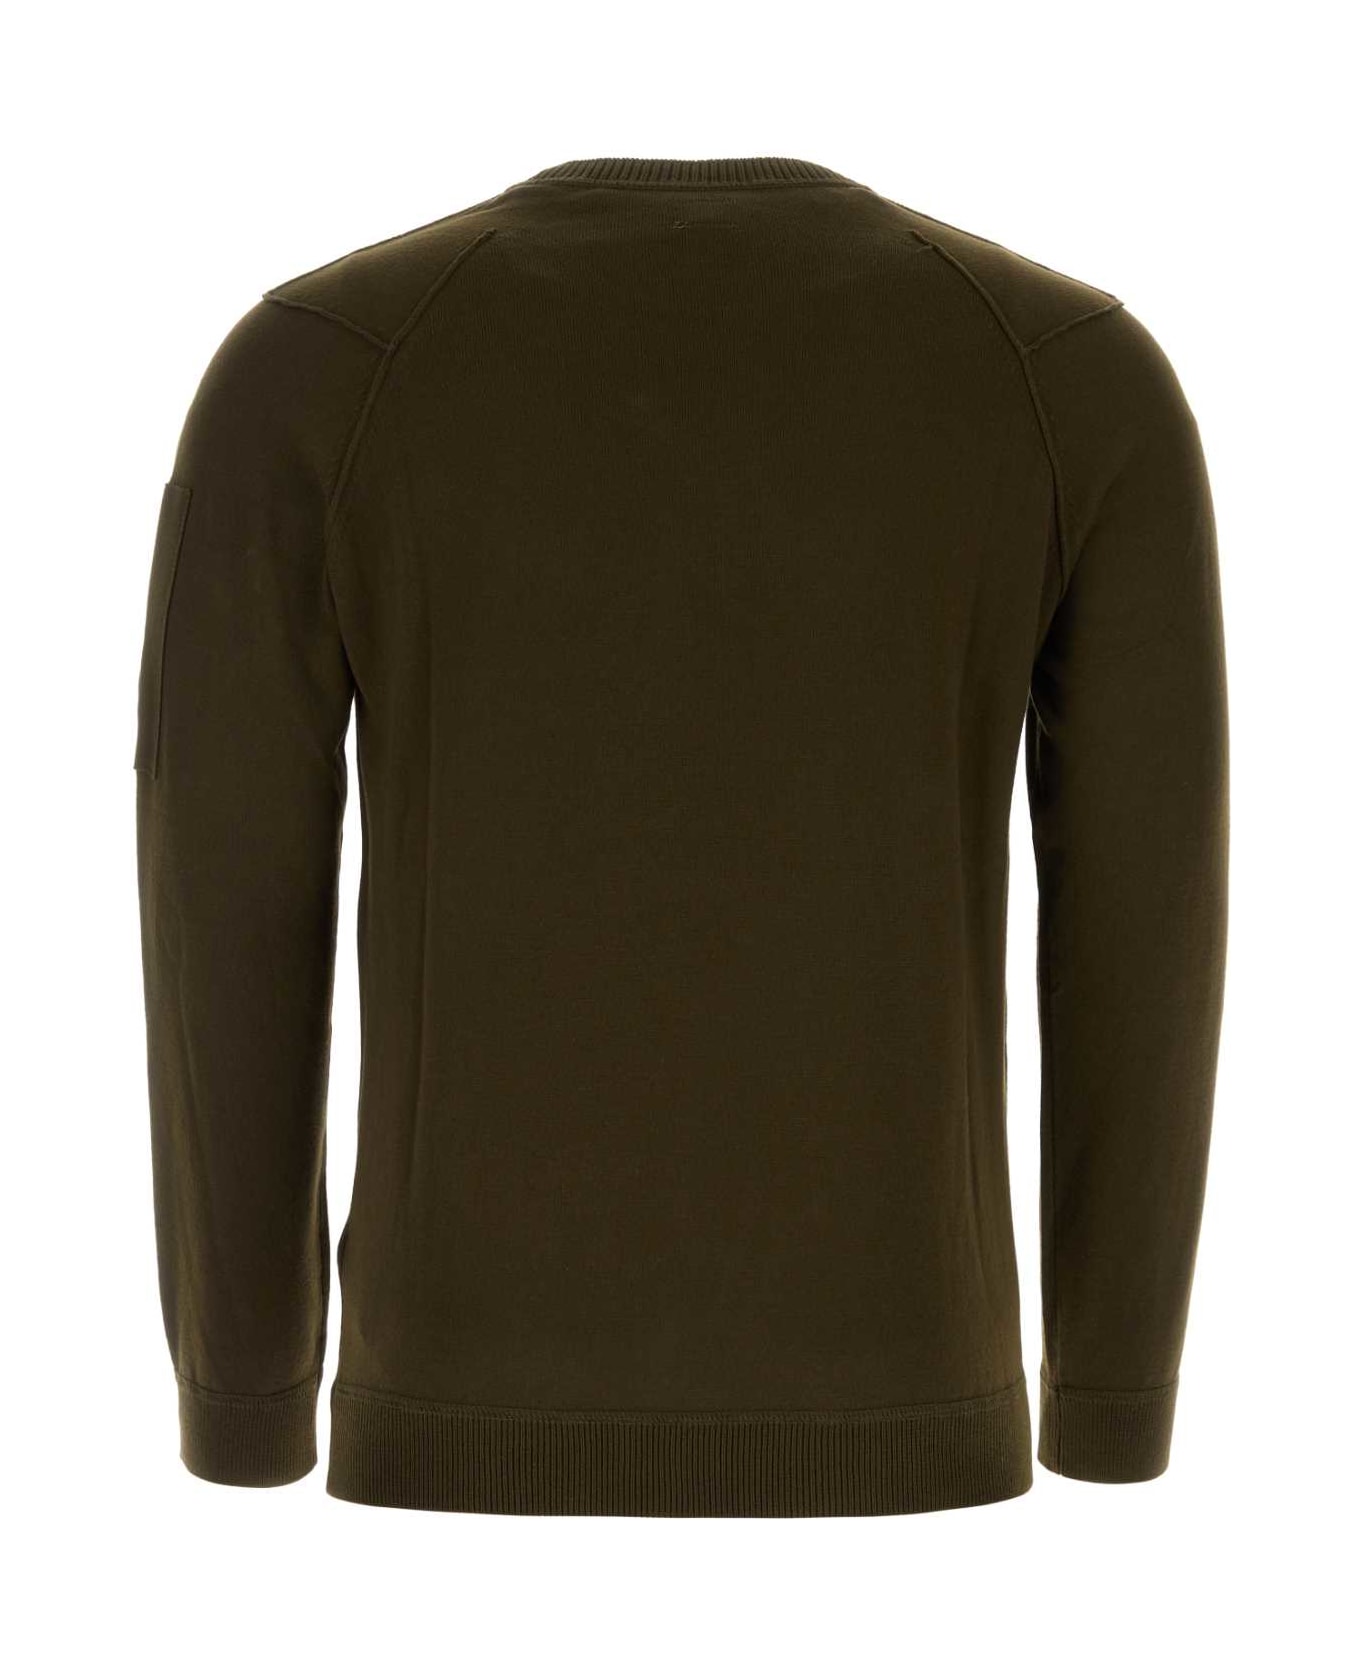 C.P. Company Dark Green Cotton Sweater - IVYGREEN ニットウェア